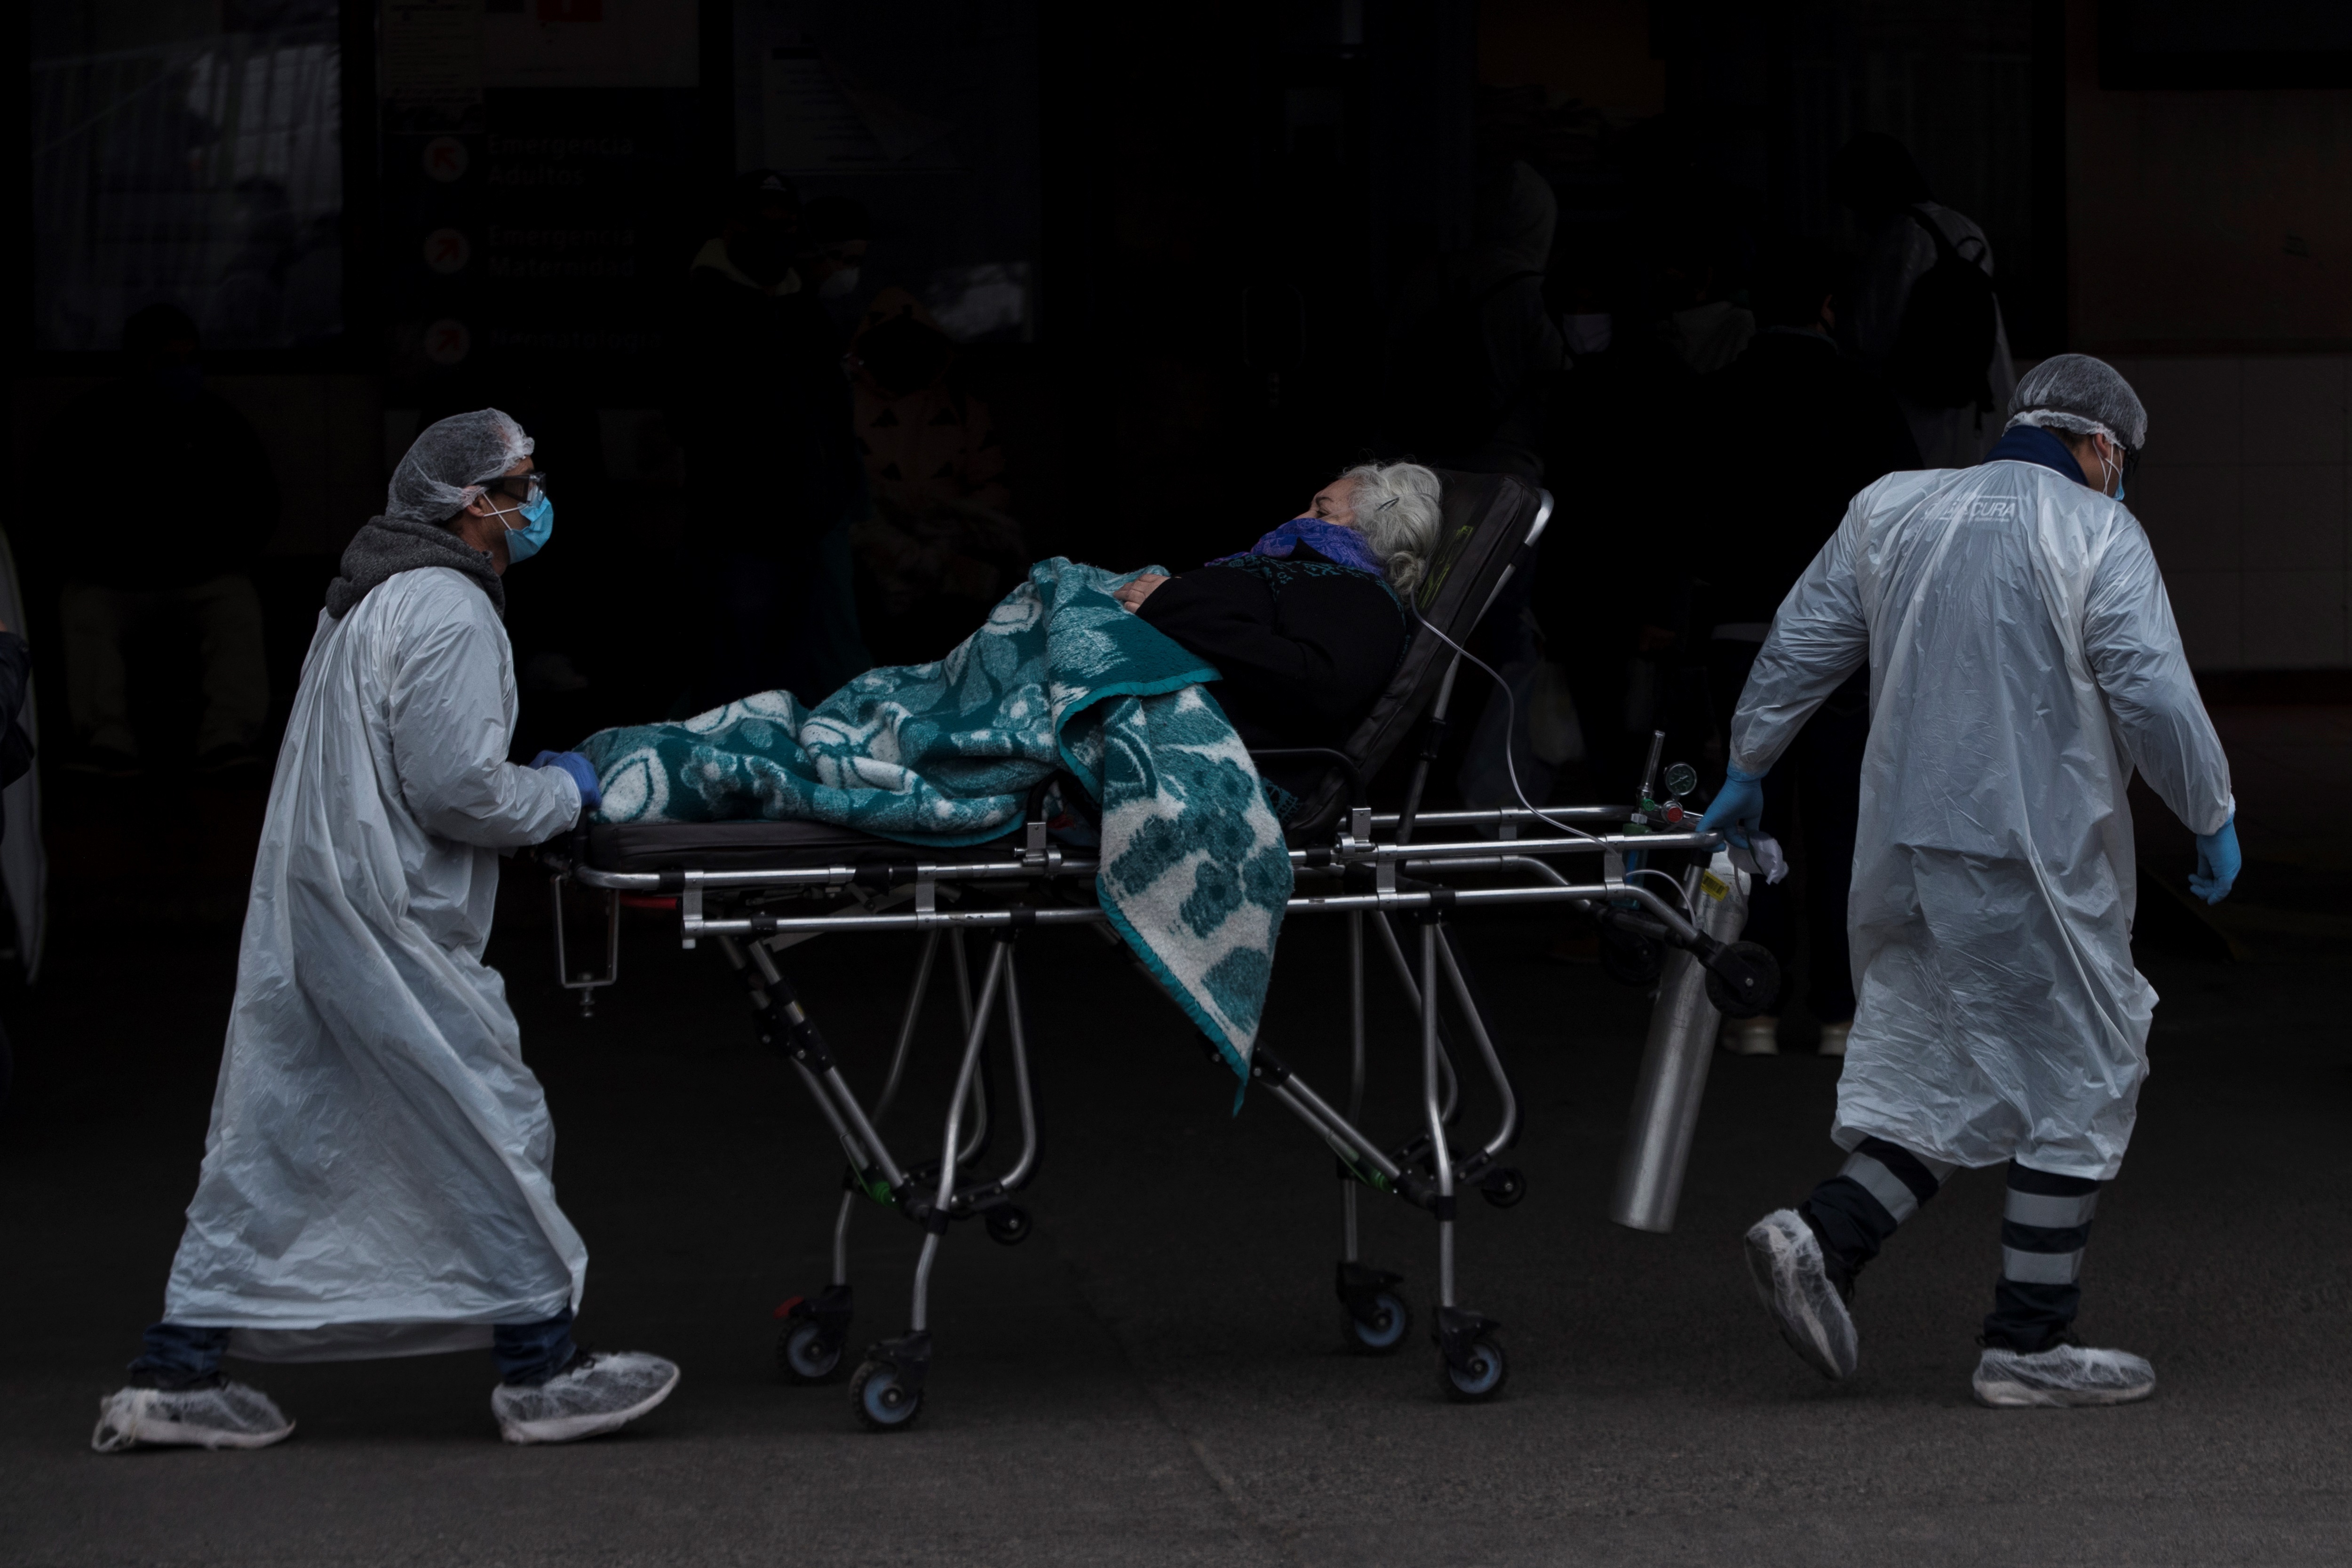 Un hospital chileno colapsó por falta de camas para pacientes de  coronavirus en estado crítico: “Estoy eligiendo, que Dios me ilumine” -  Infobae